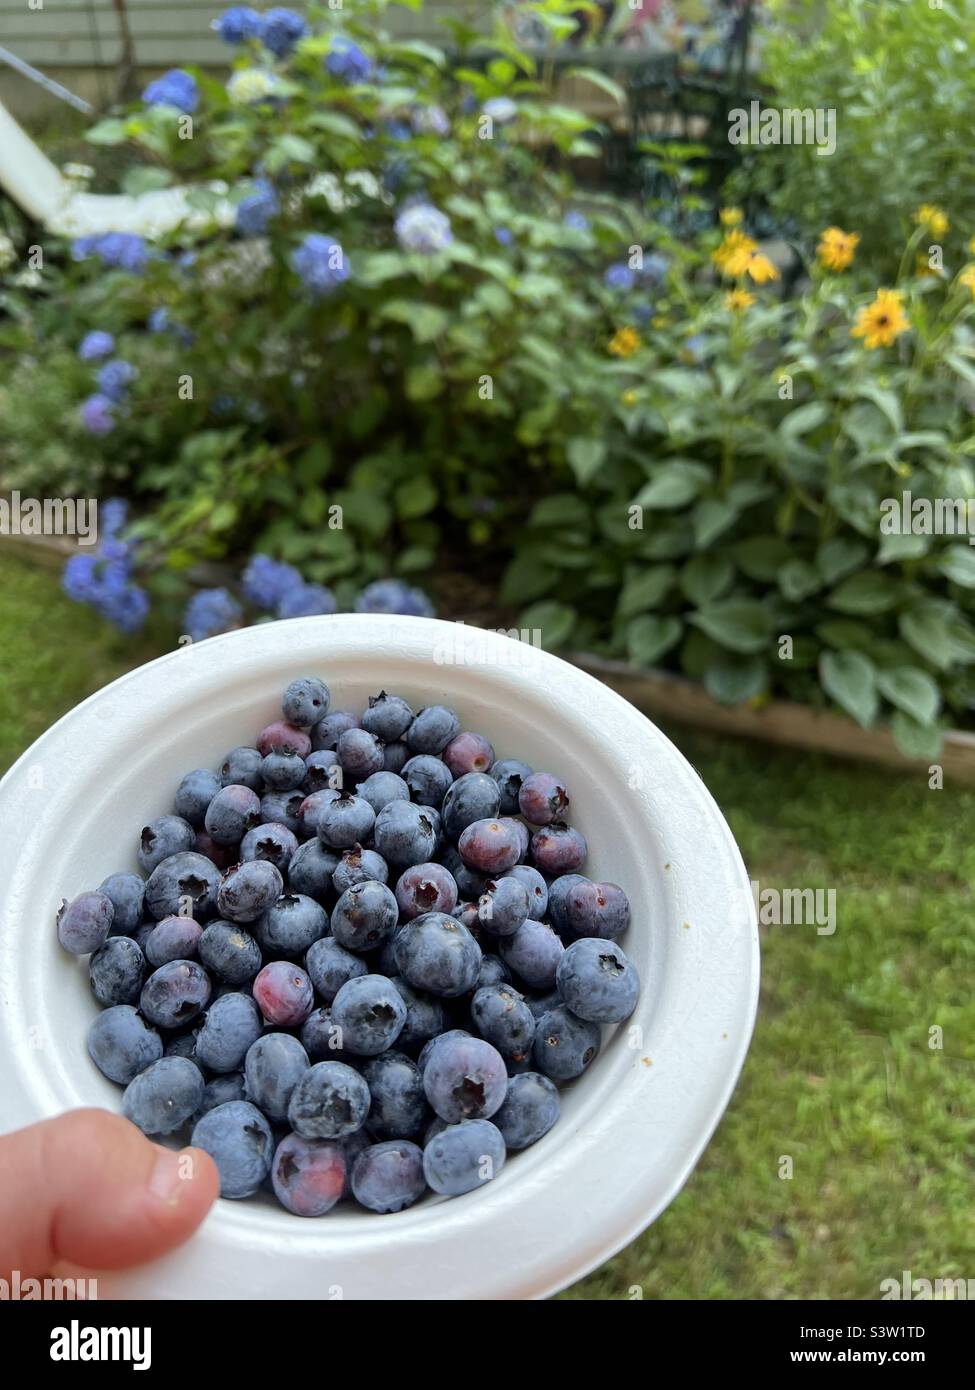 Fresh picked blueberries, Jersey bluets, from home garden in Massachusetts Stock Photo